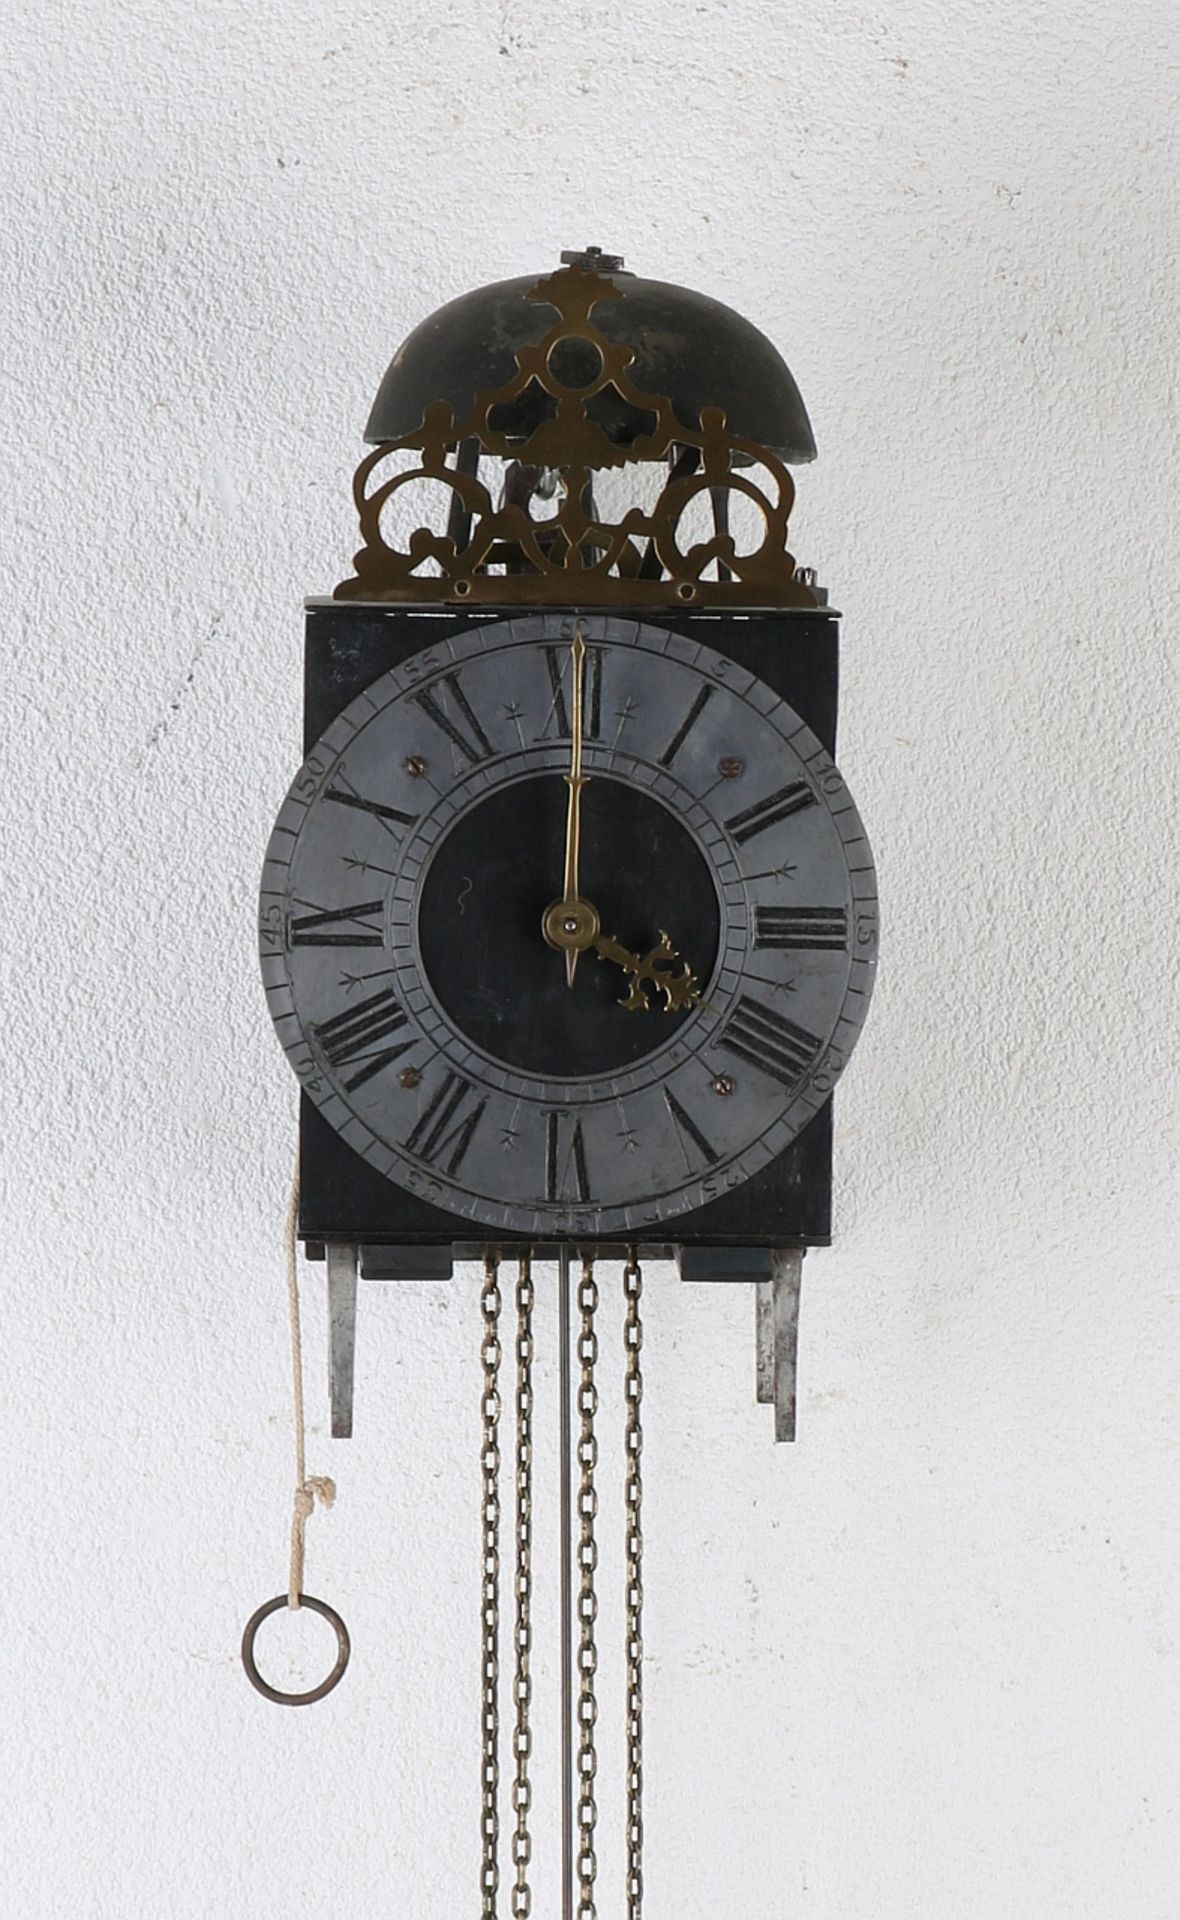 18th Century French lantern clock - Image 2 of 2